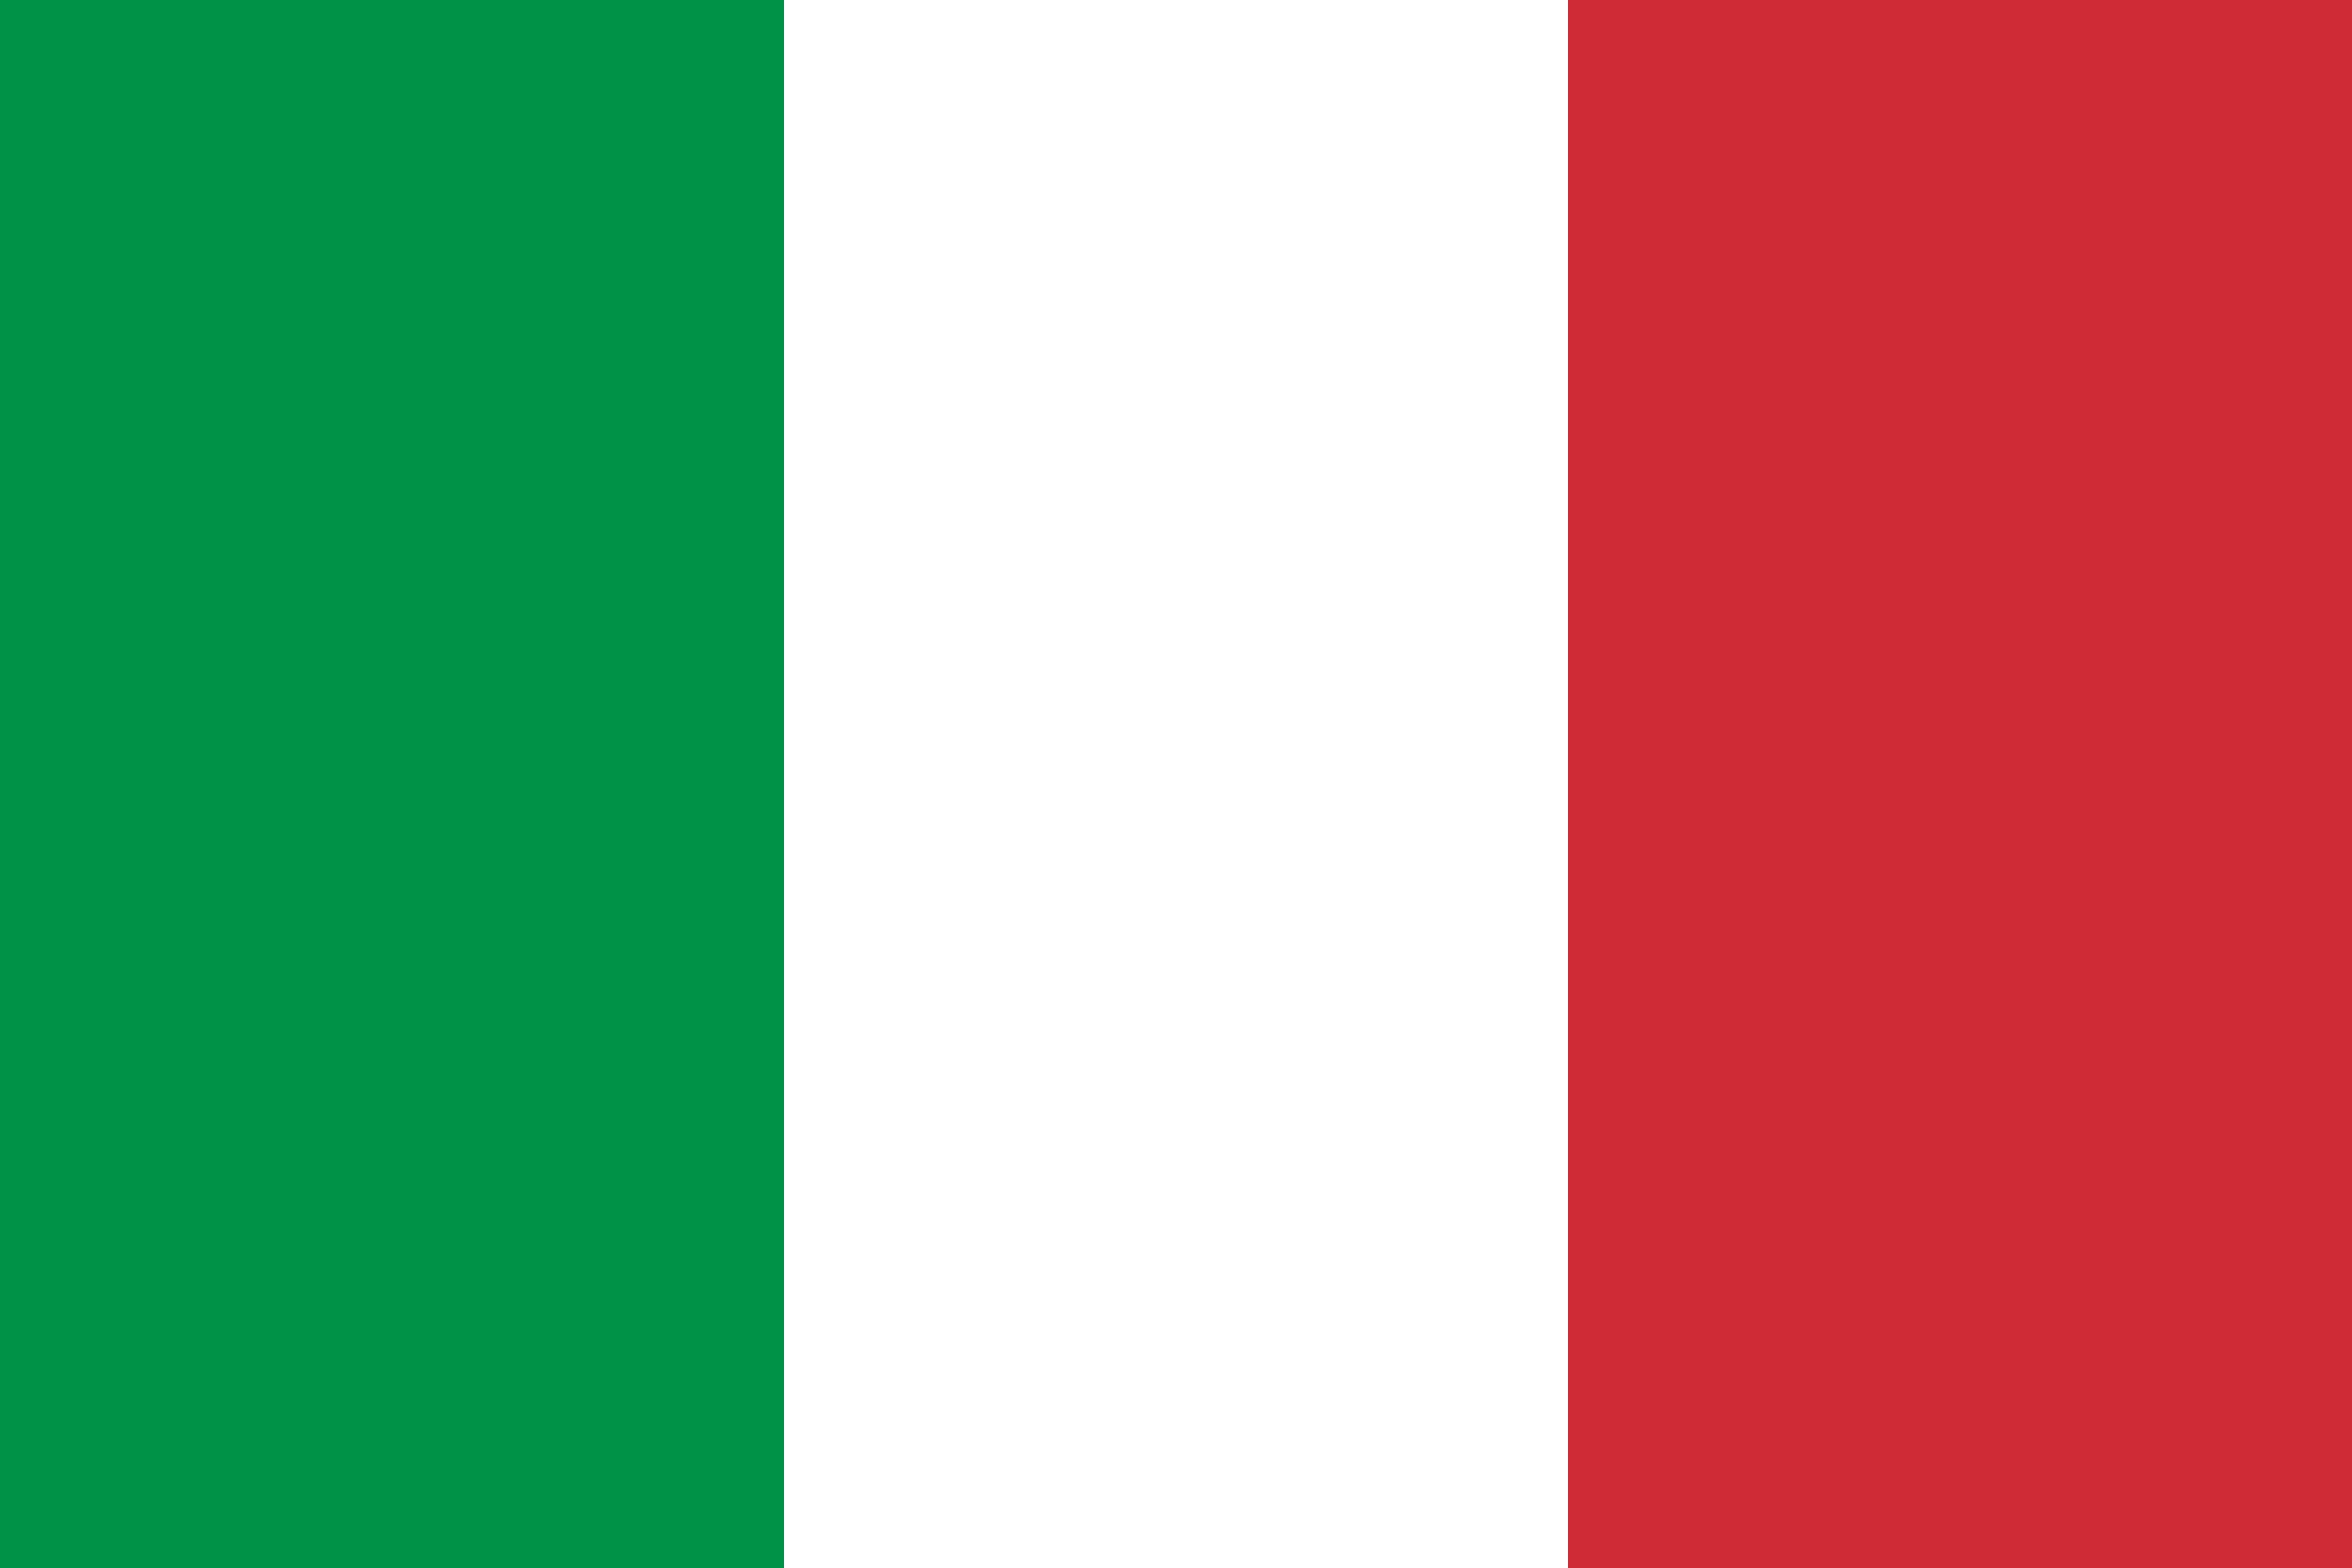 NATIONAL FLAG OF ITALY | The Flagman
